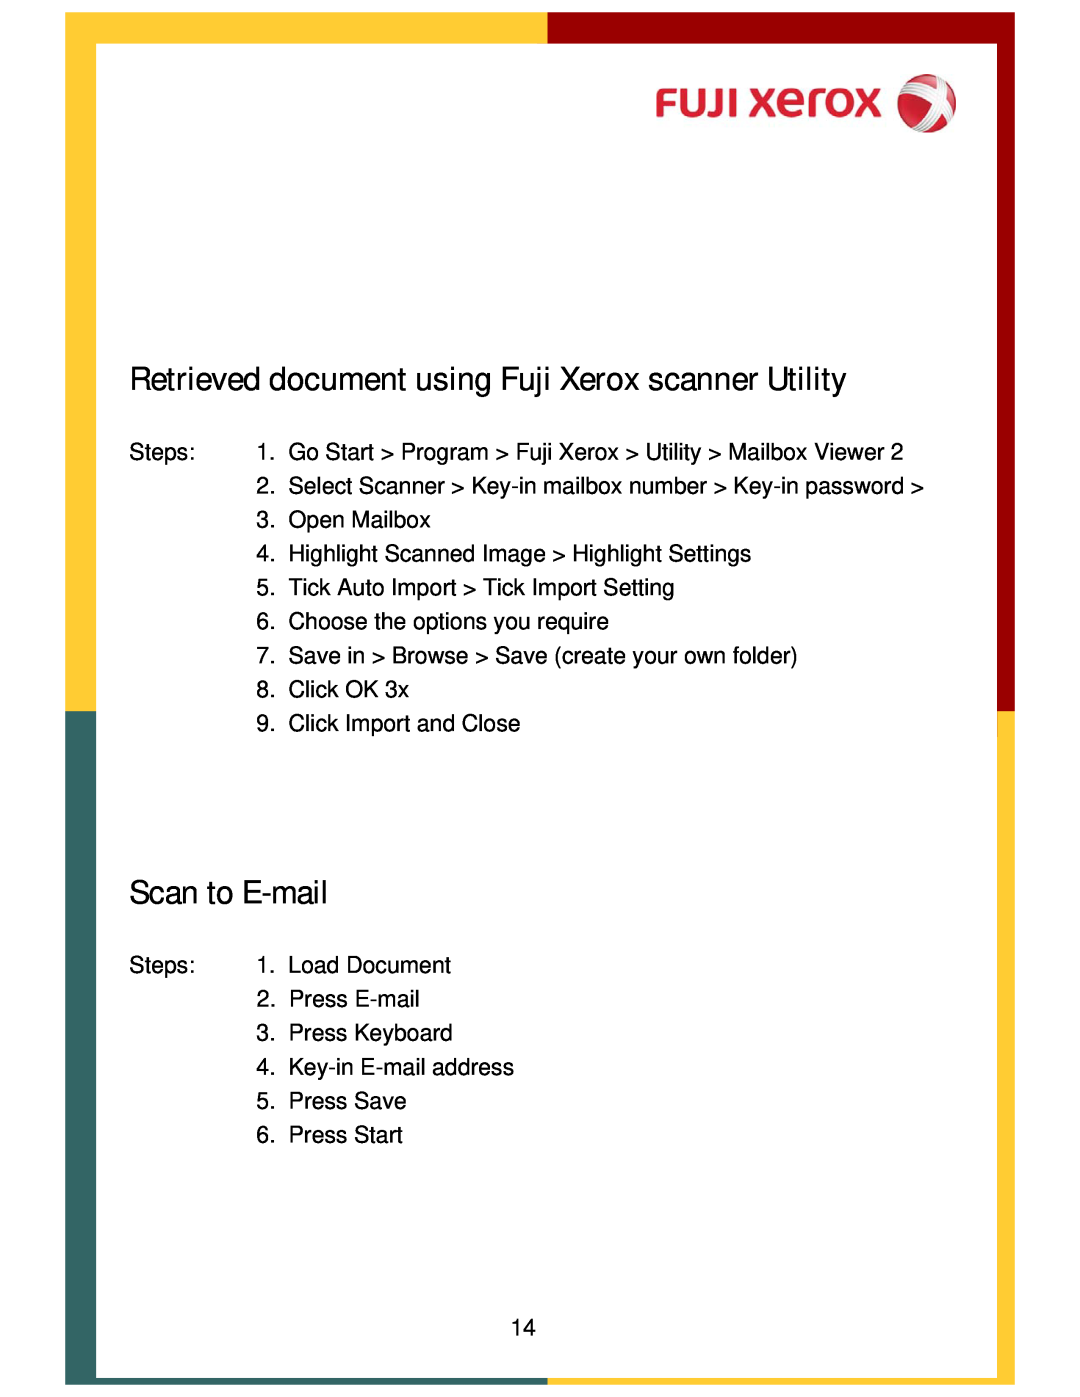 Xerox 320, DCC400 manual Retrieved document using Fuji Xerox scanner Utility, Scan to E-mail, Key-in E-mail address 